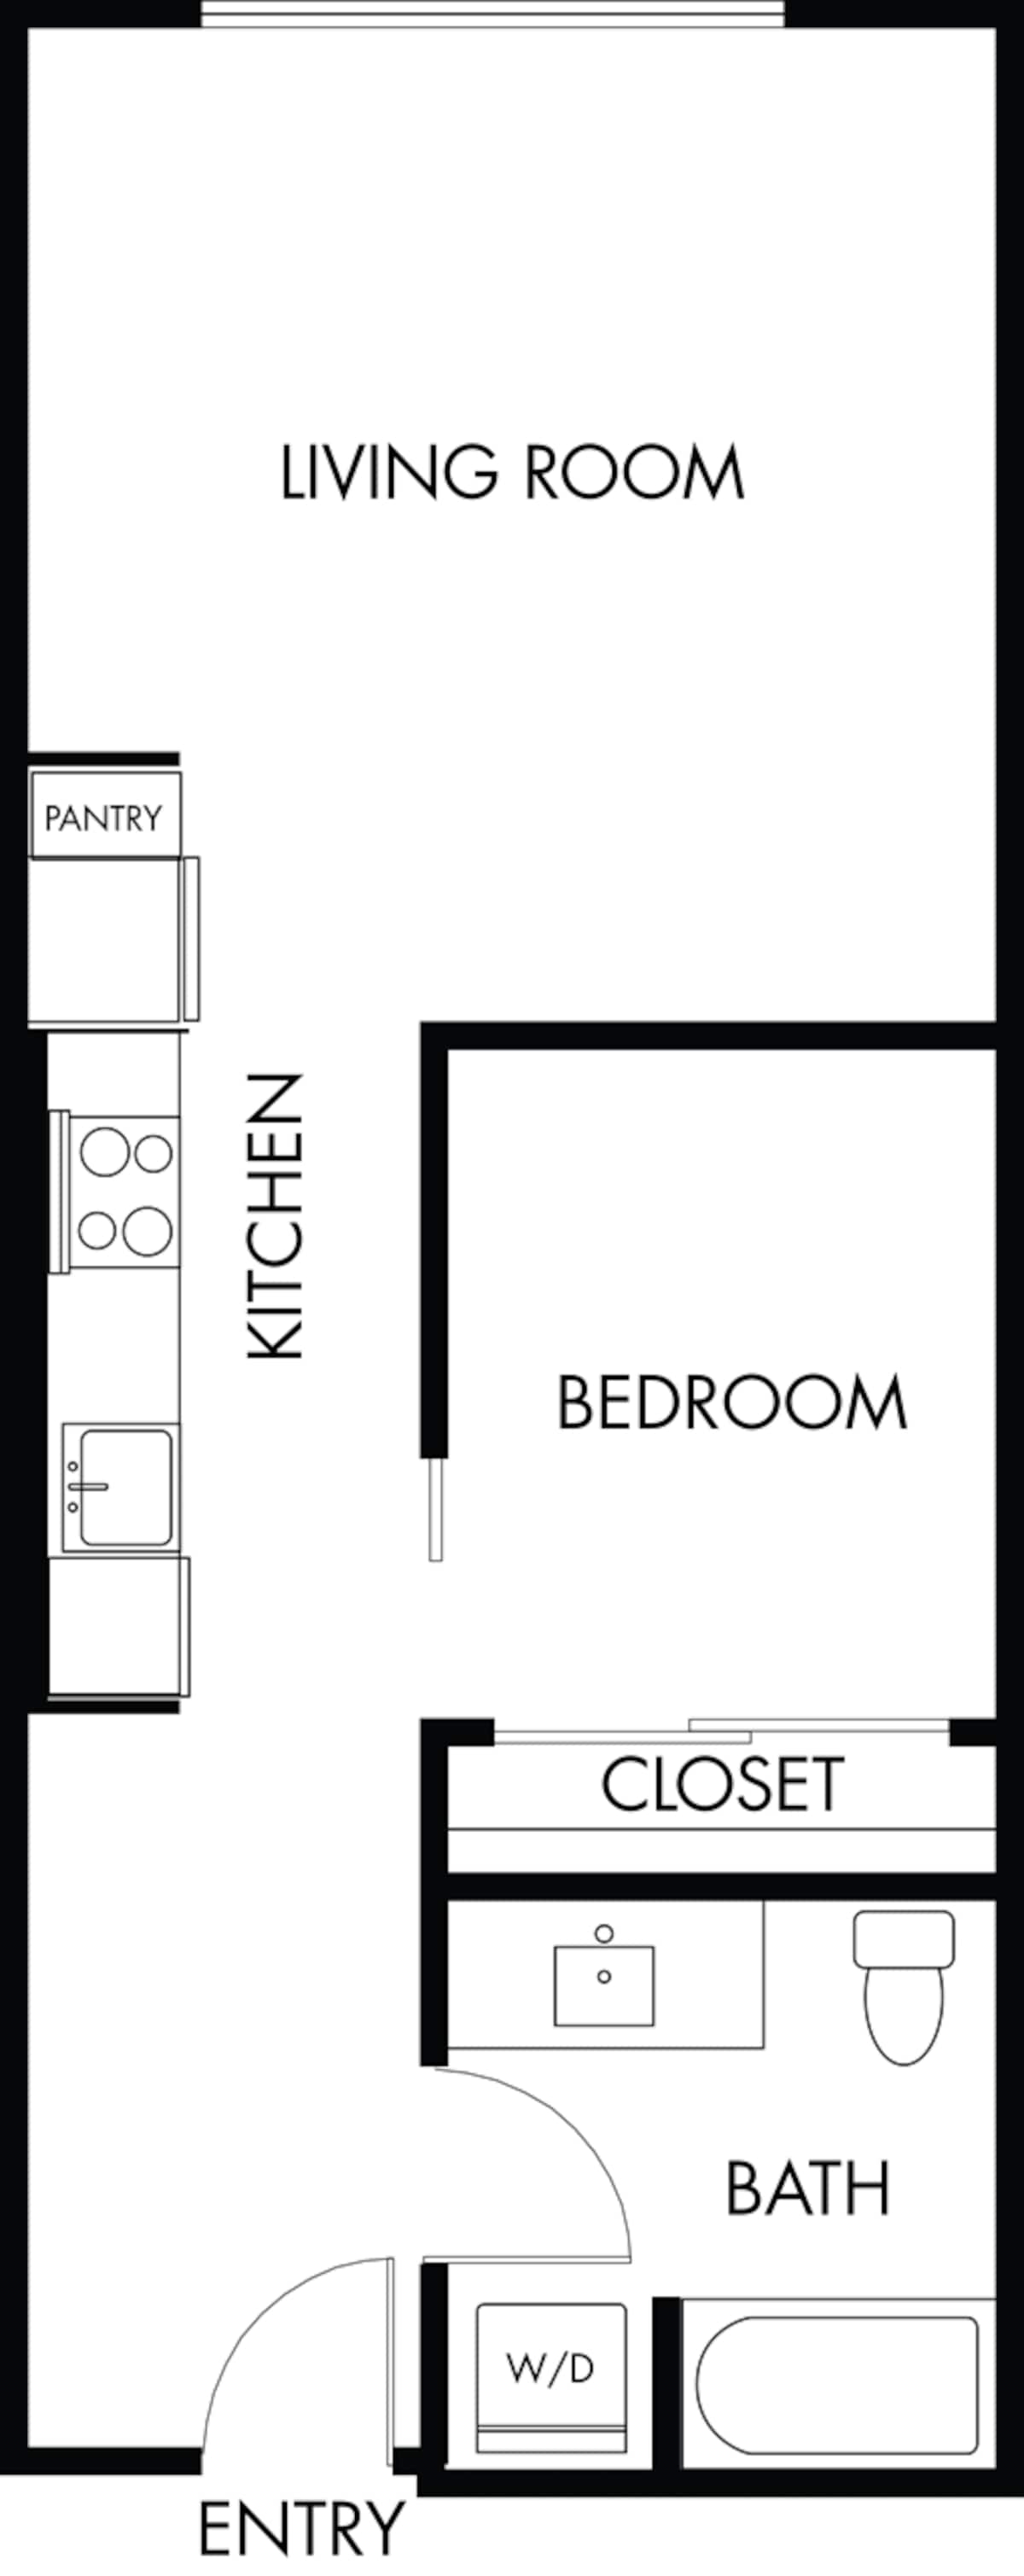 Floorplan diagram for O1.5, showing 1 bedroom